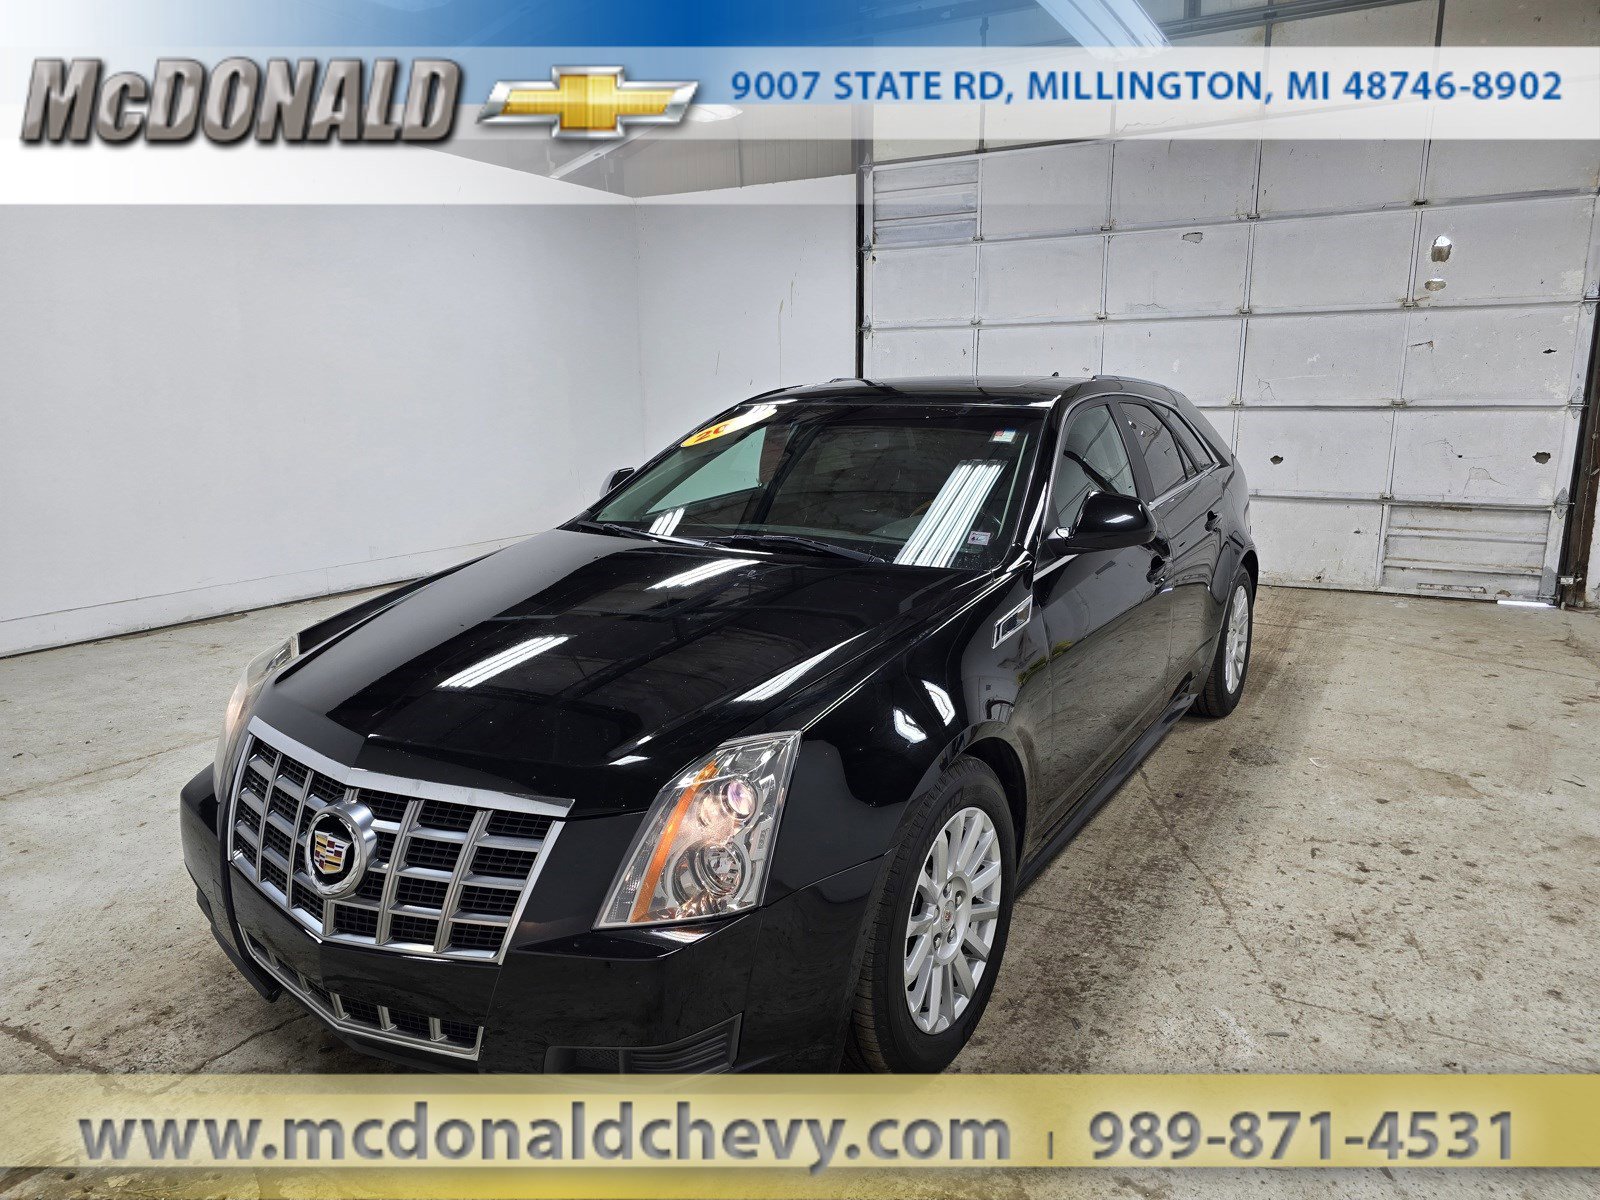 2014 Cadillac CTS Millington MI